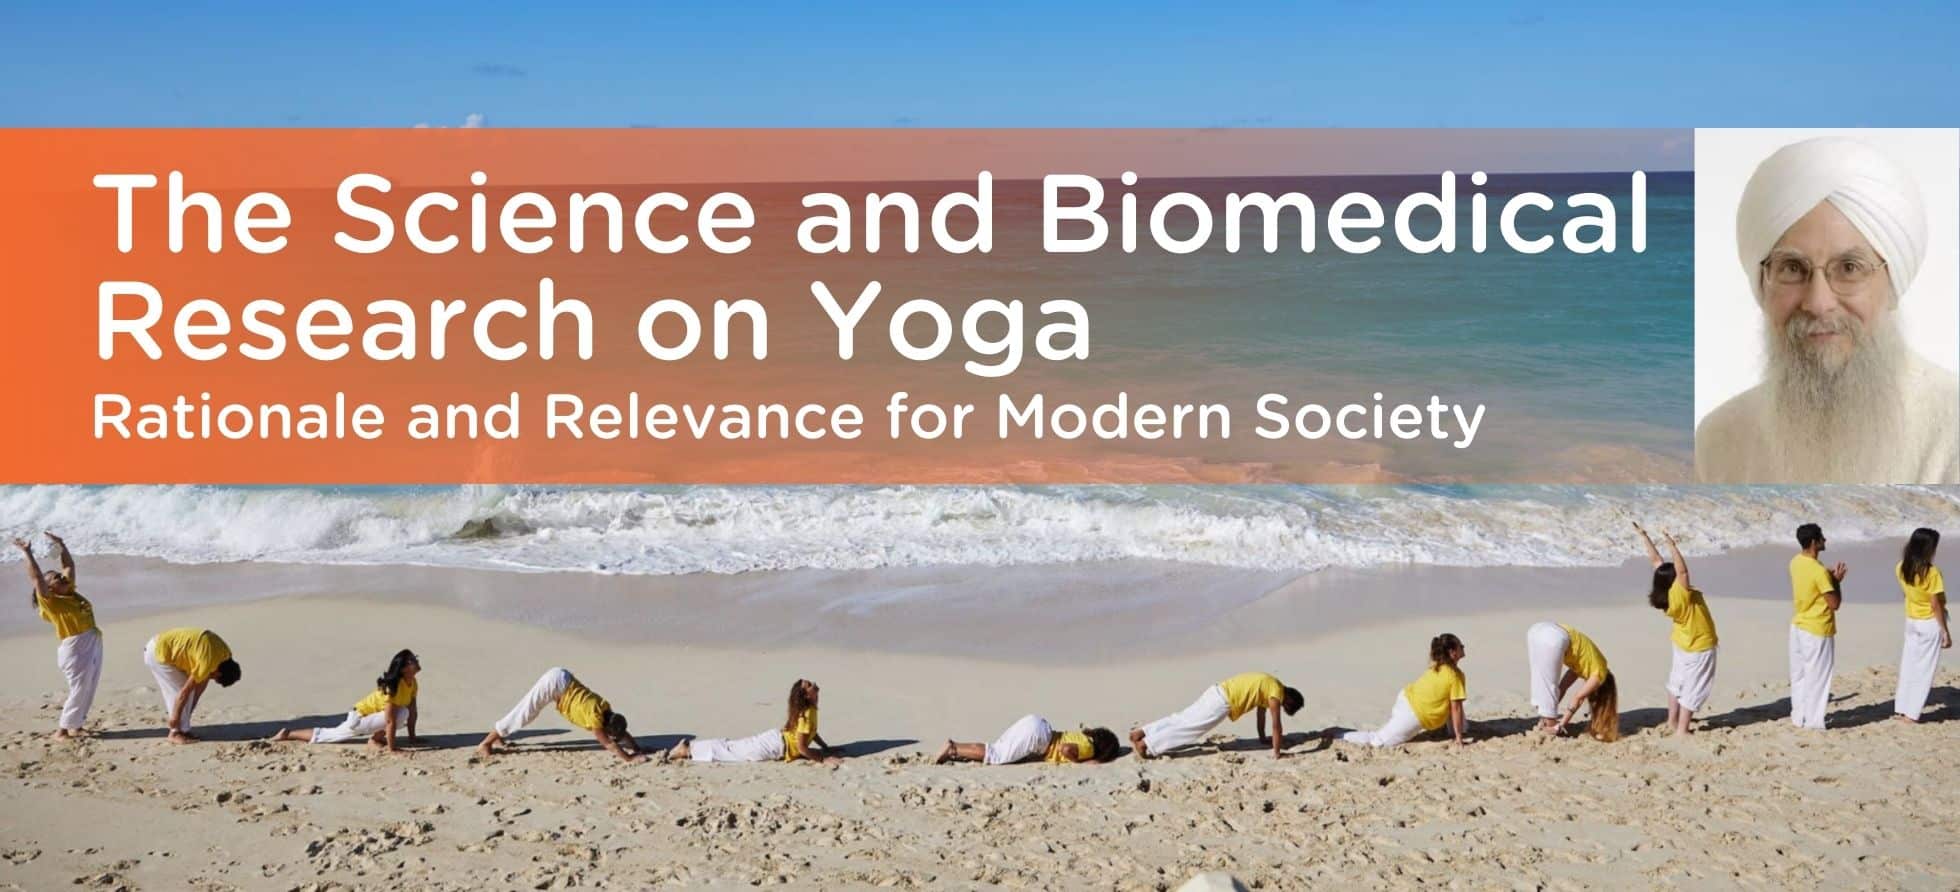 biomedical research on yoga